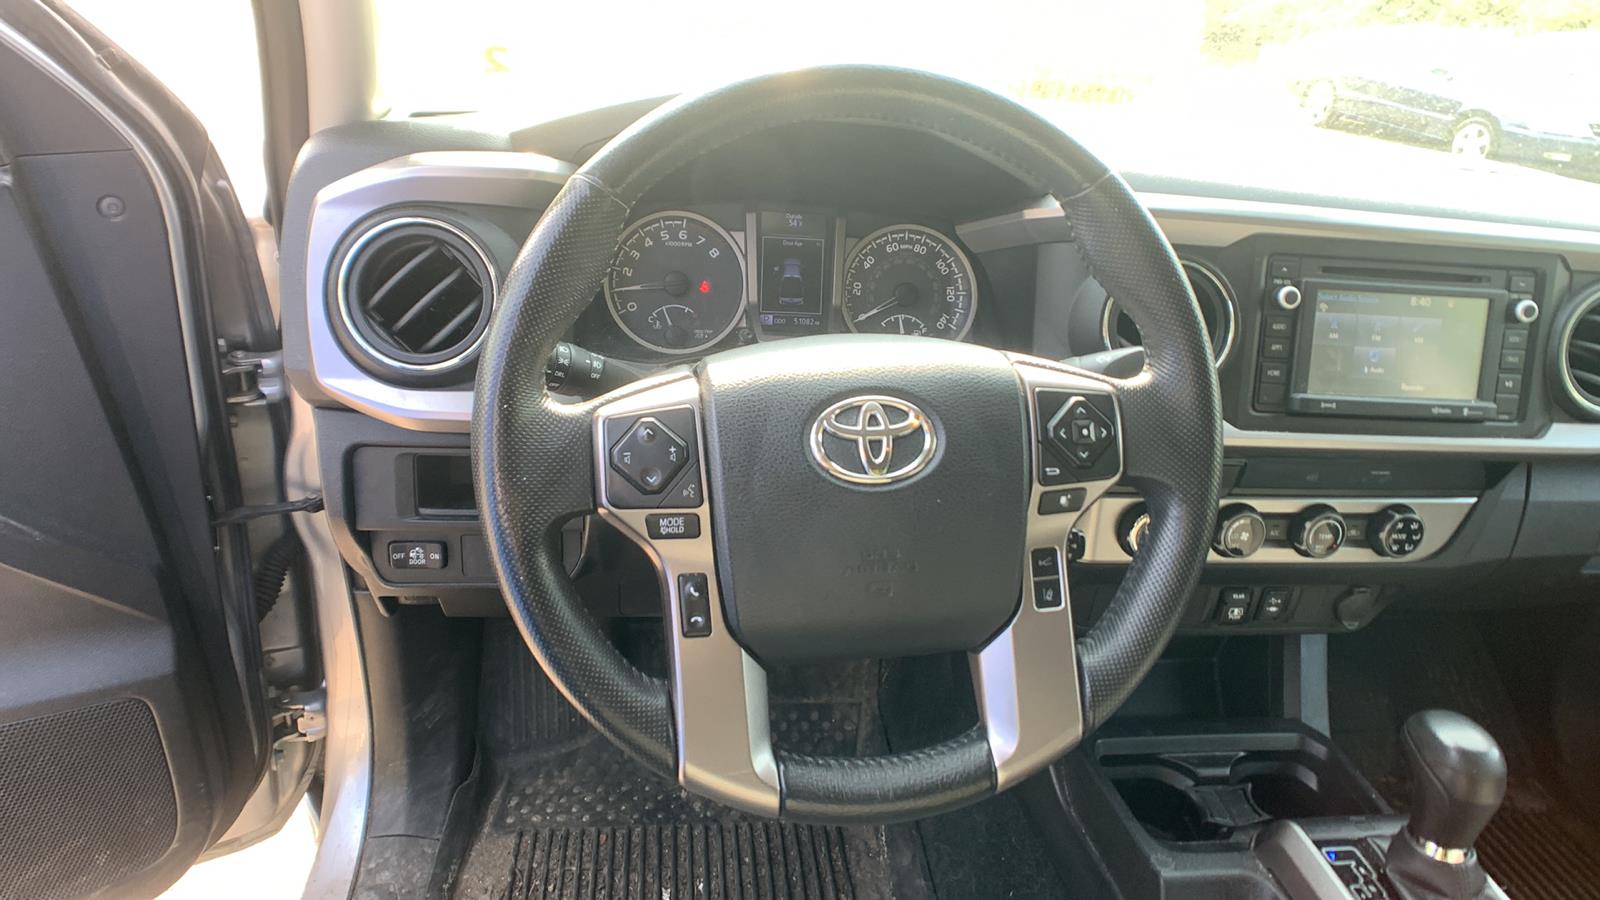 2018 Toyota Tacoma Long Bed,Crew Cab Pickup